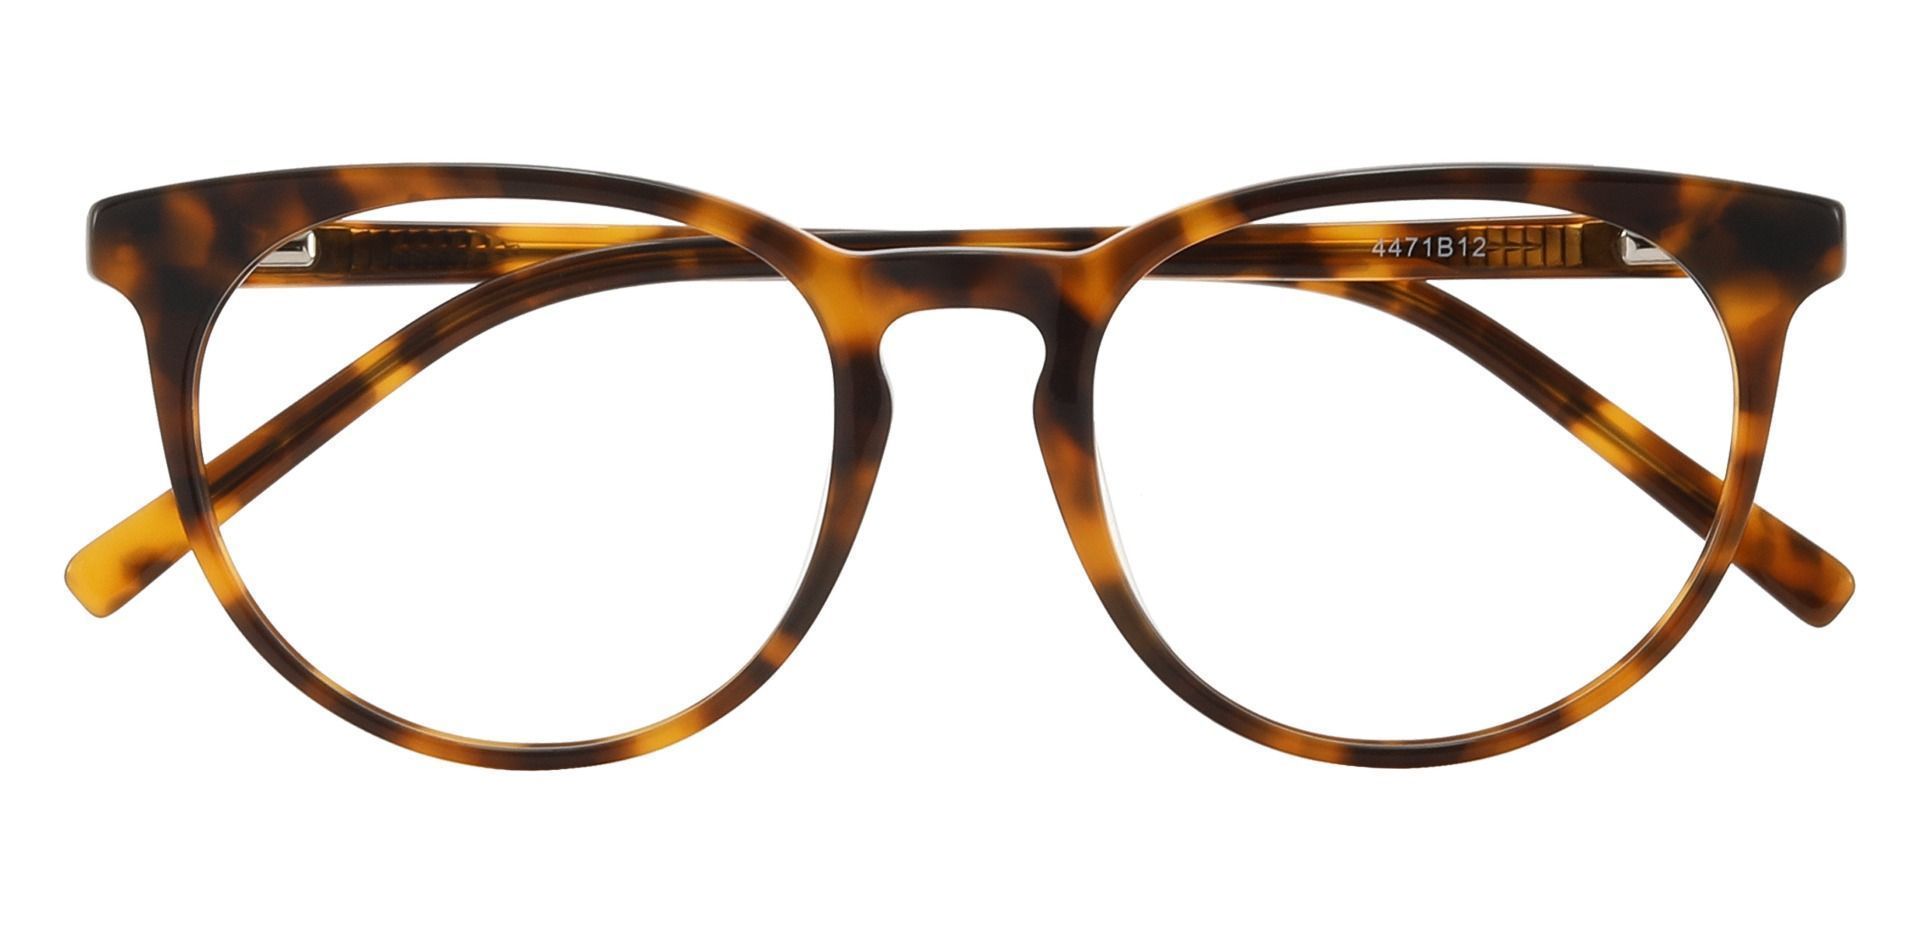 Tybee Oval Prescription Glasses - Tortoise